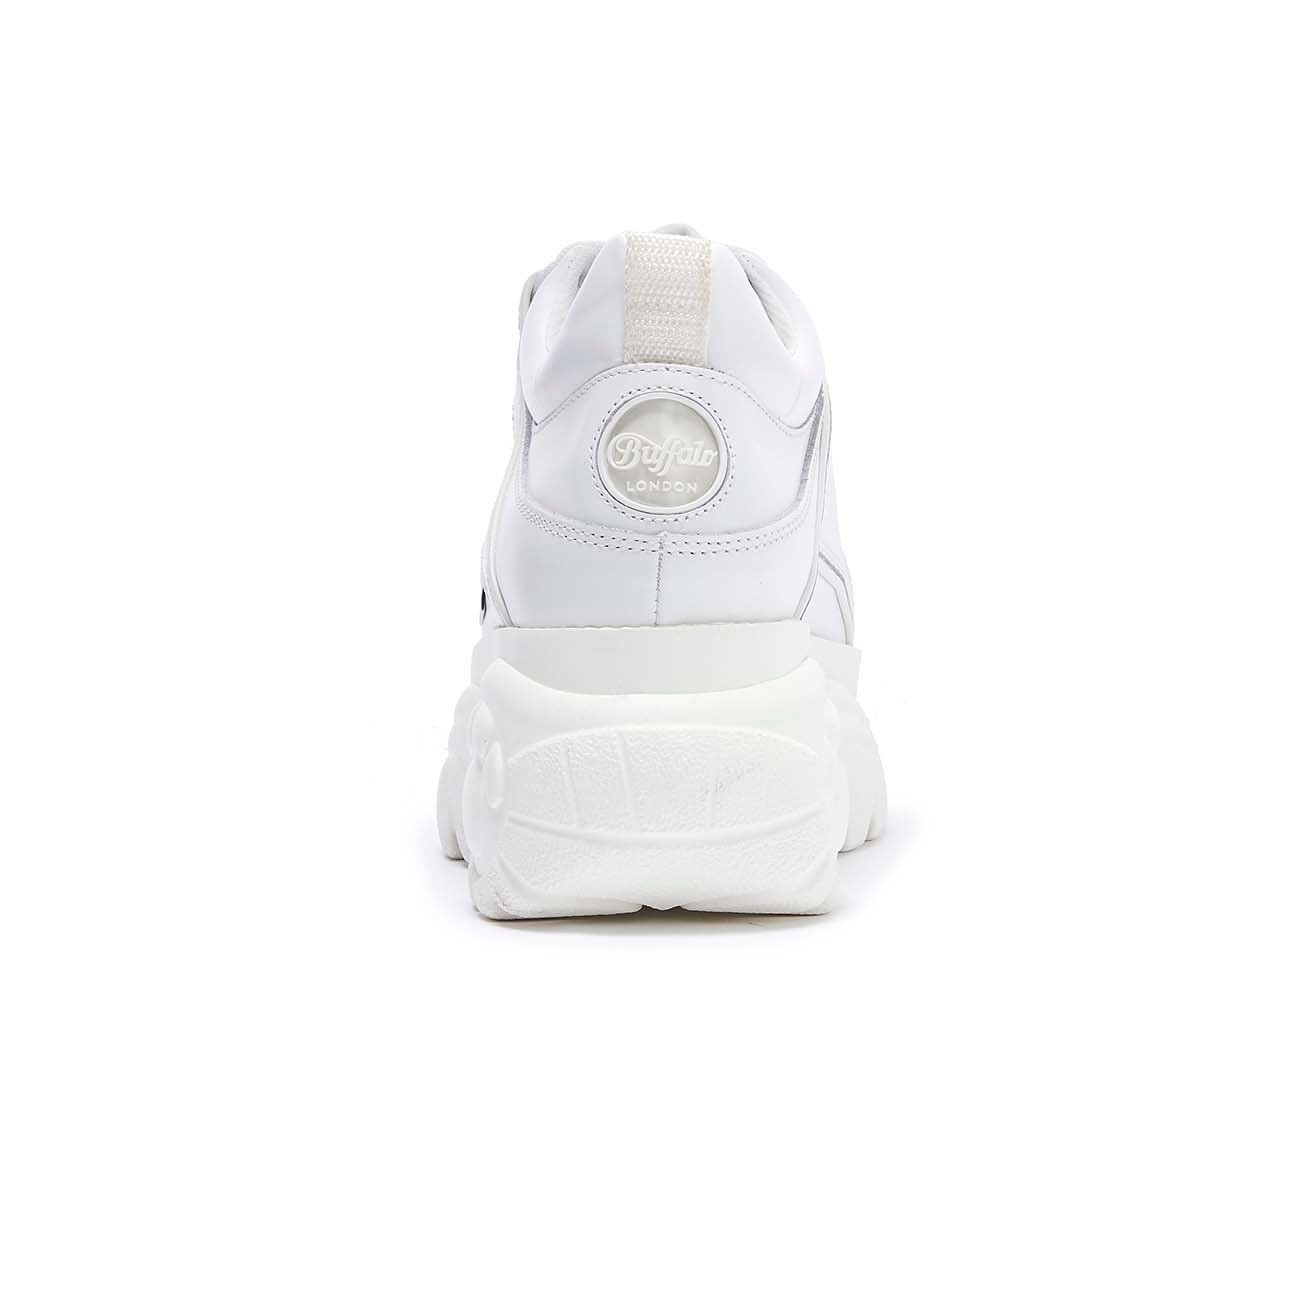 Full White Casual Shoe